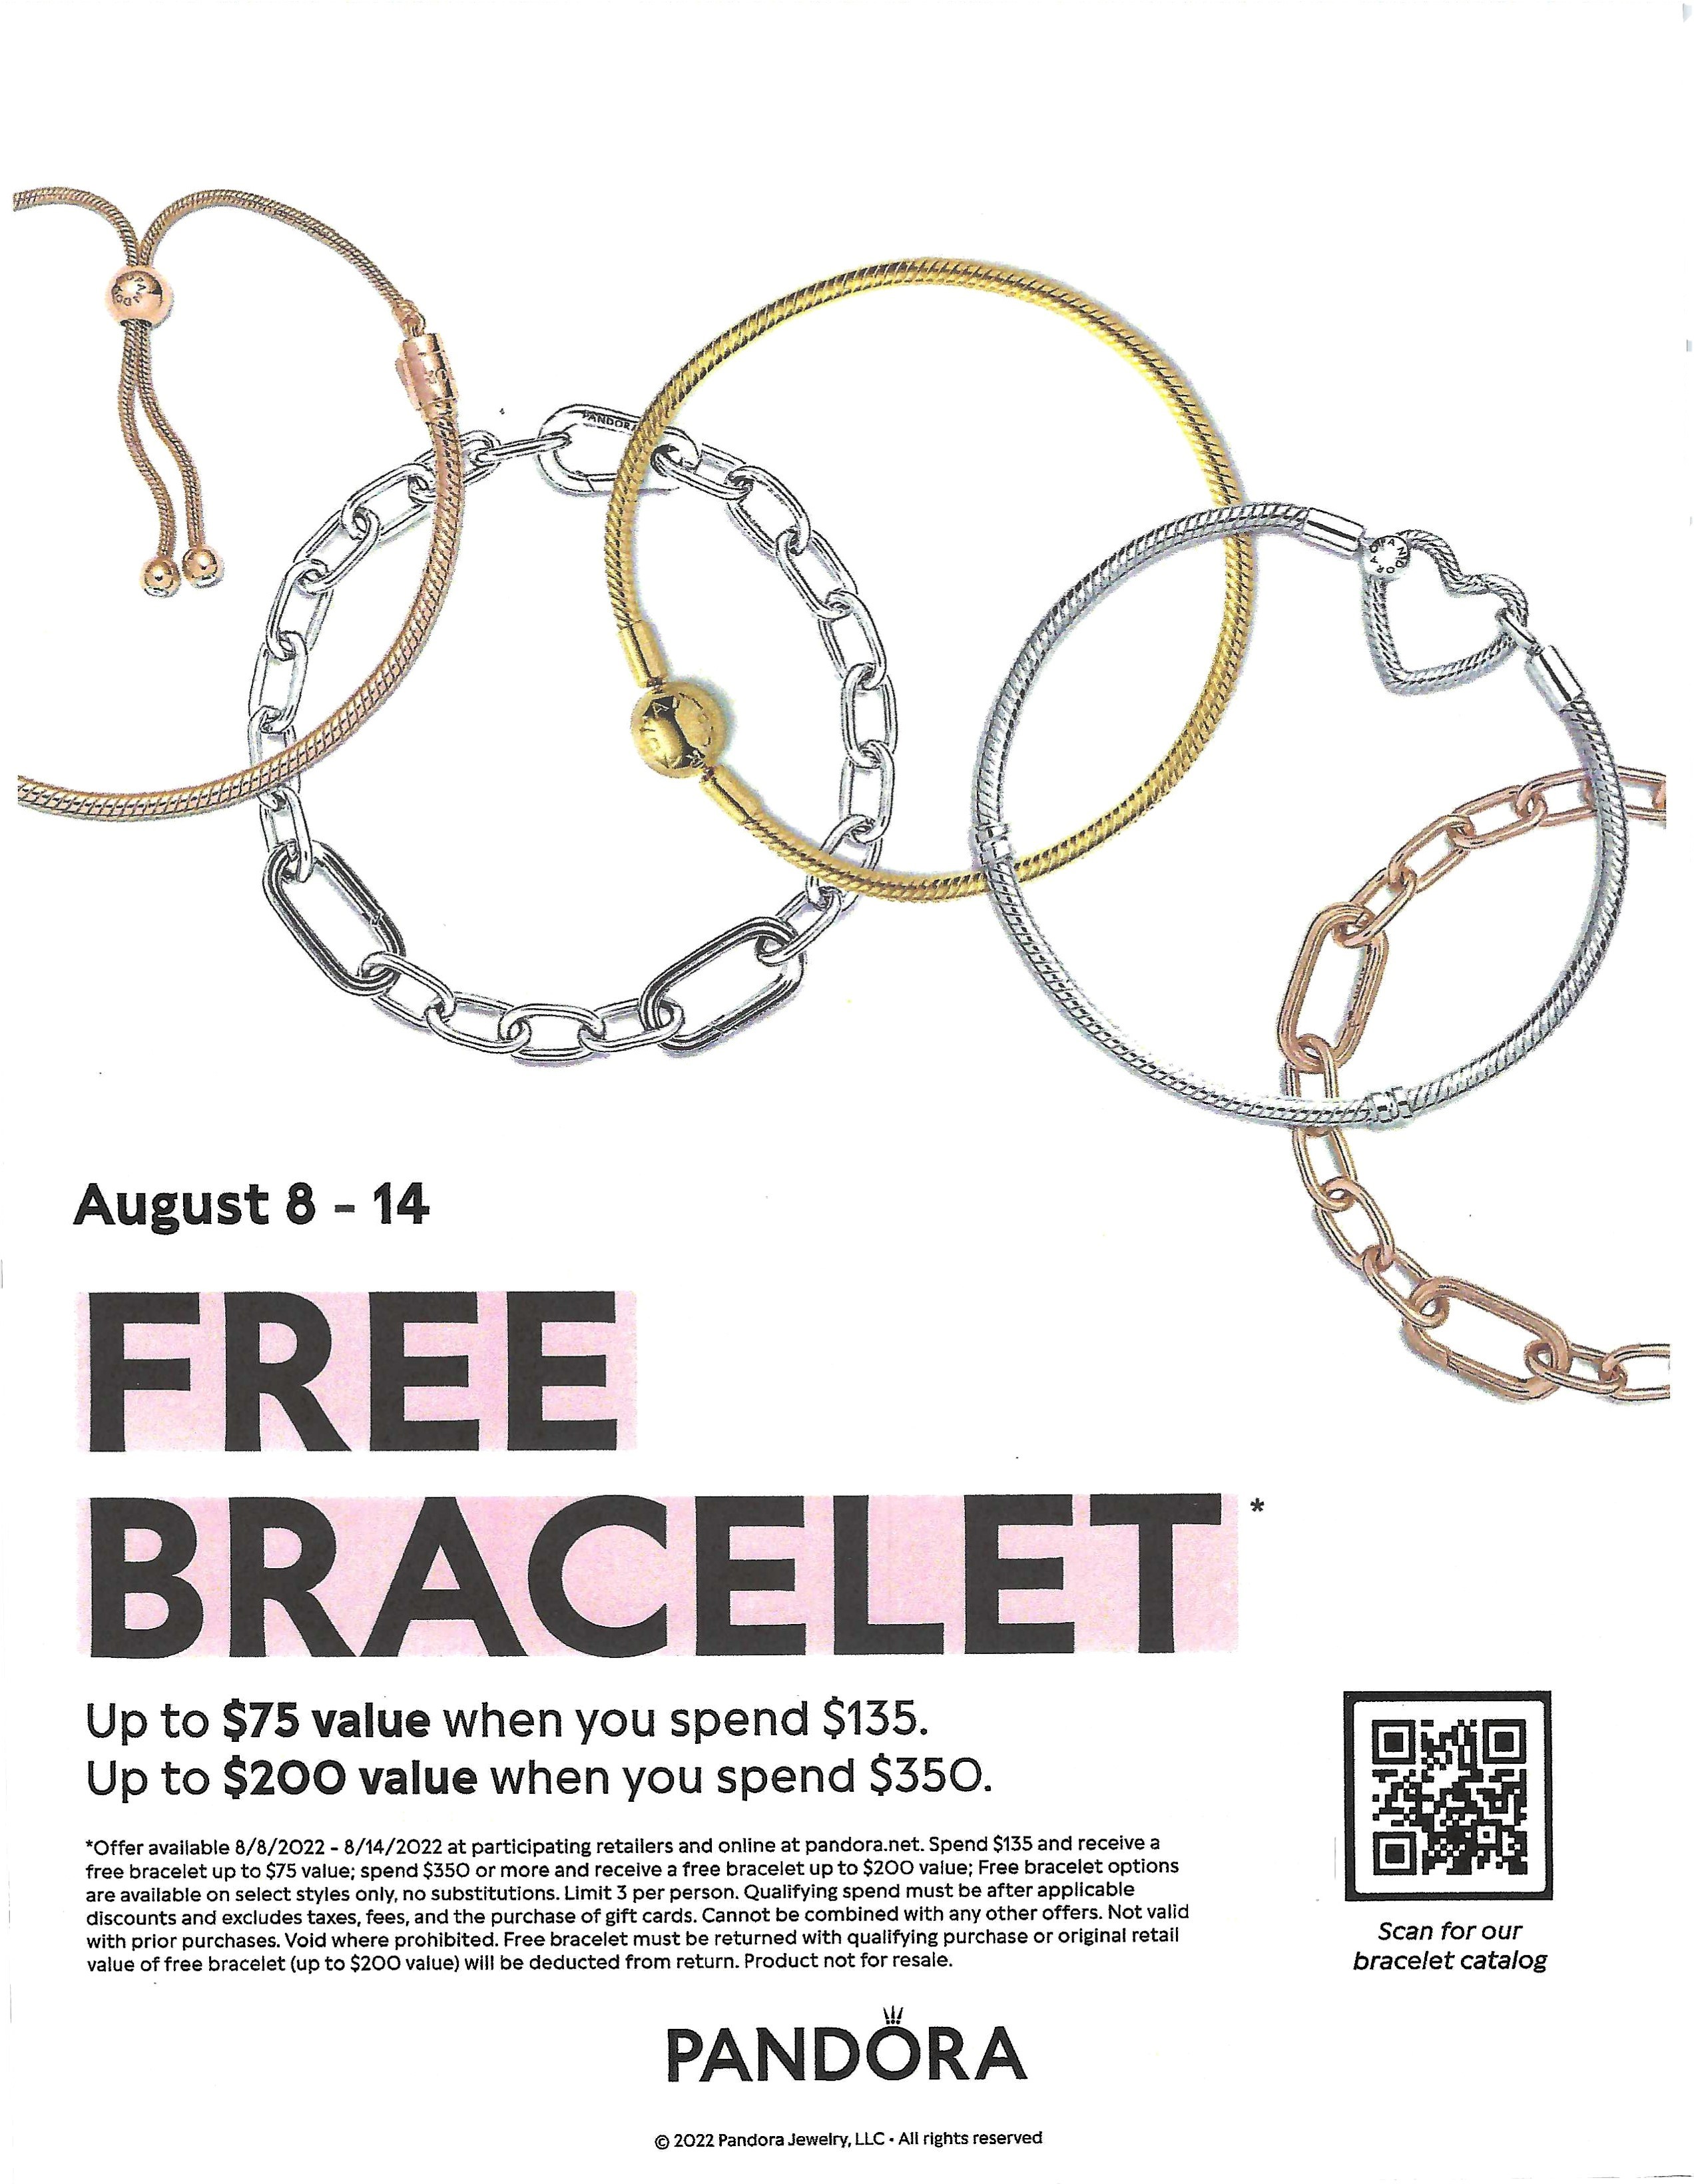 Free Bracelet* from PANDORA